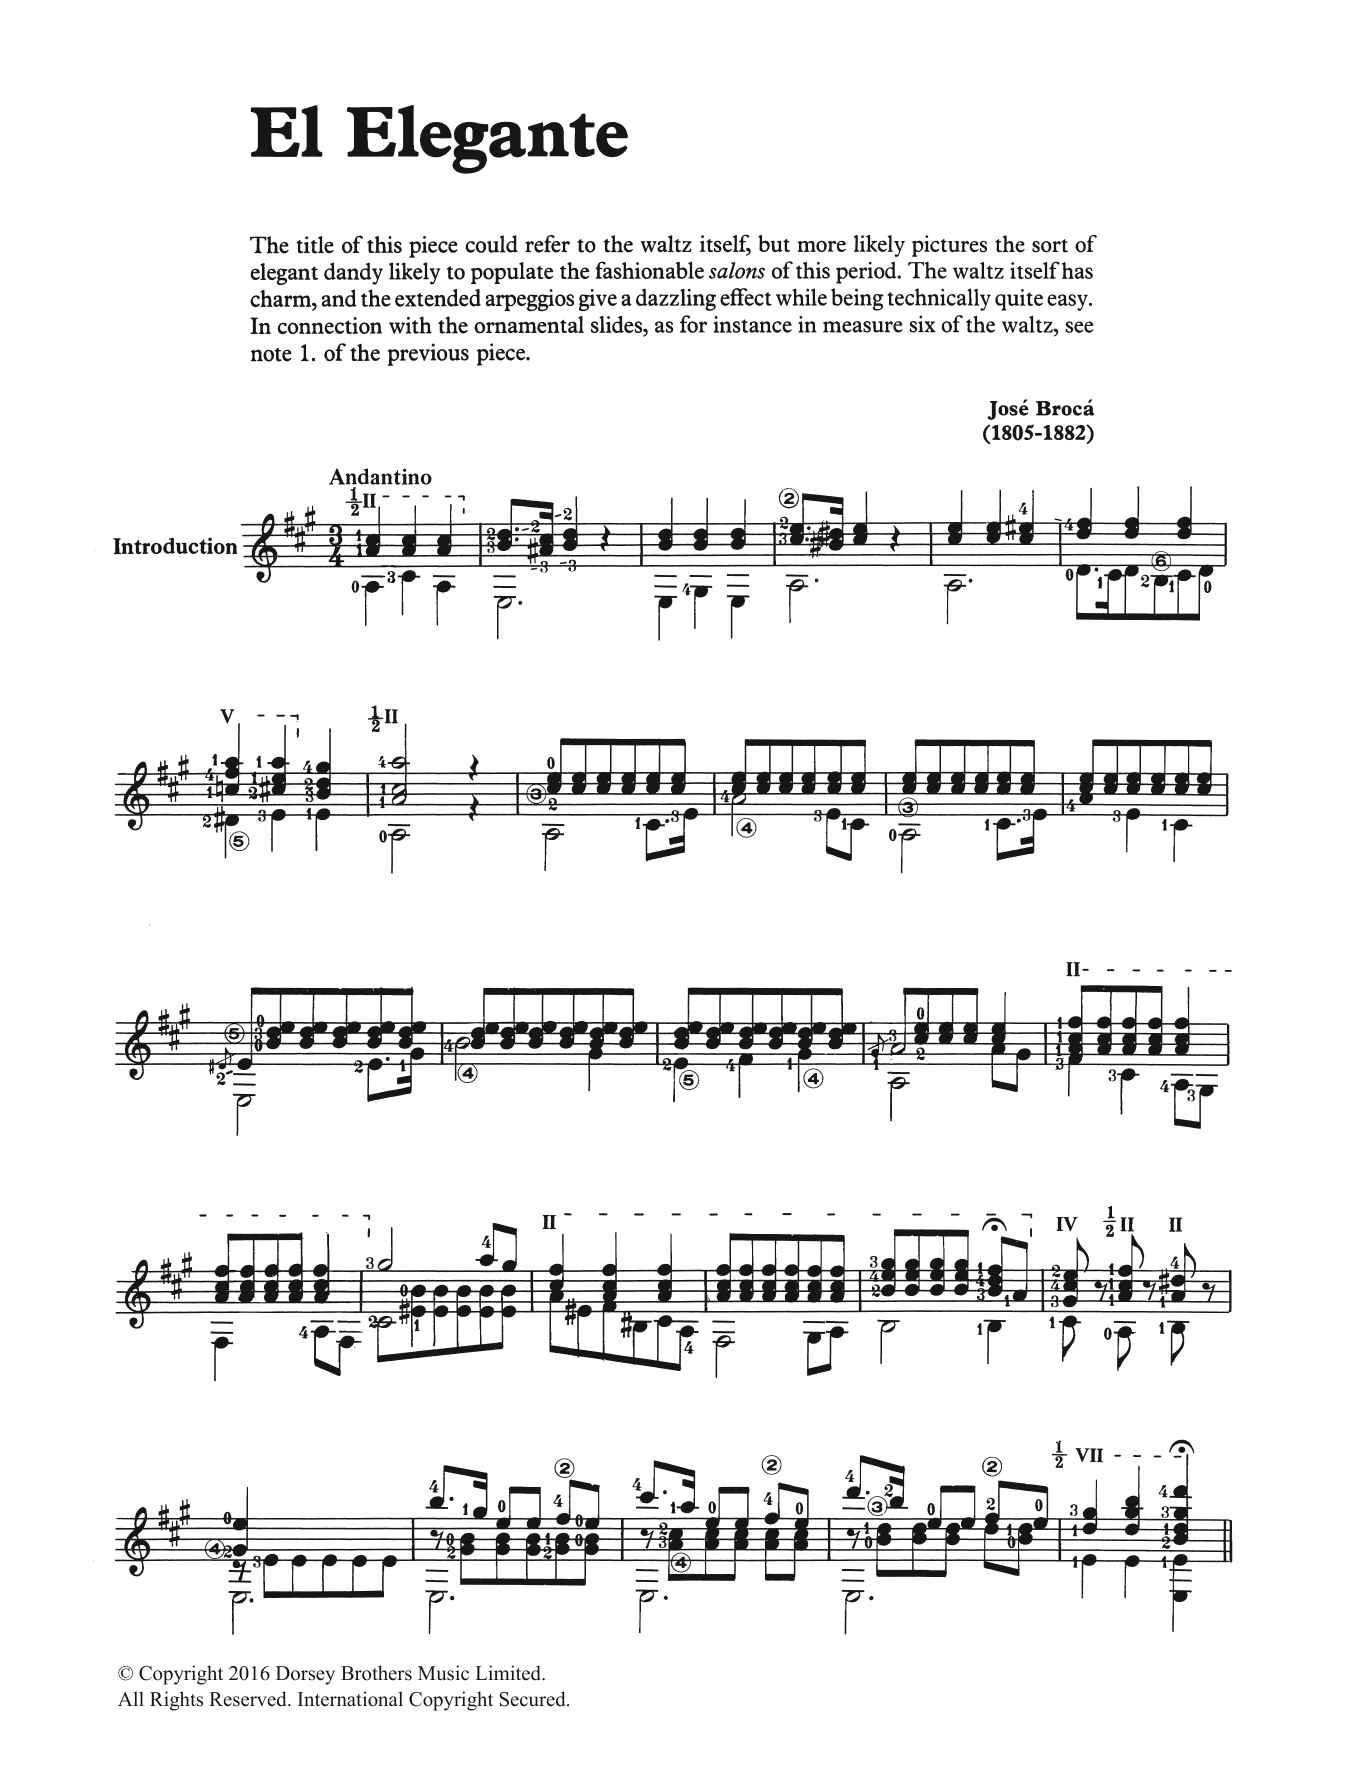 Download Jose Broca El Elegante Sheet Music and learn how to play Guitar PDF digital score in minutes